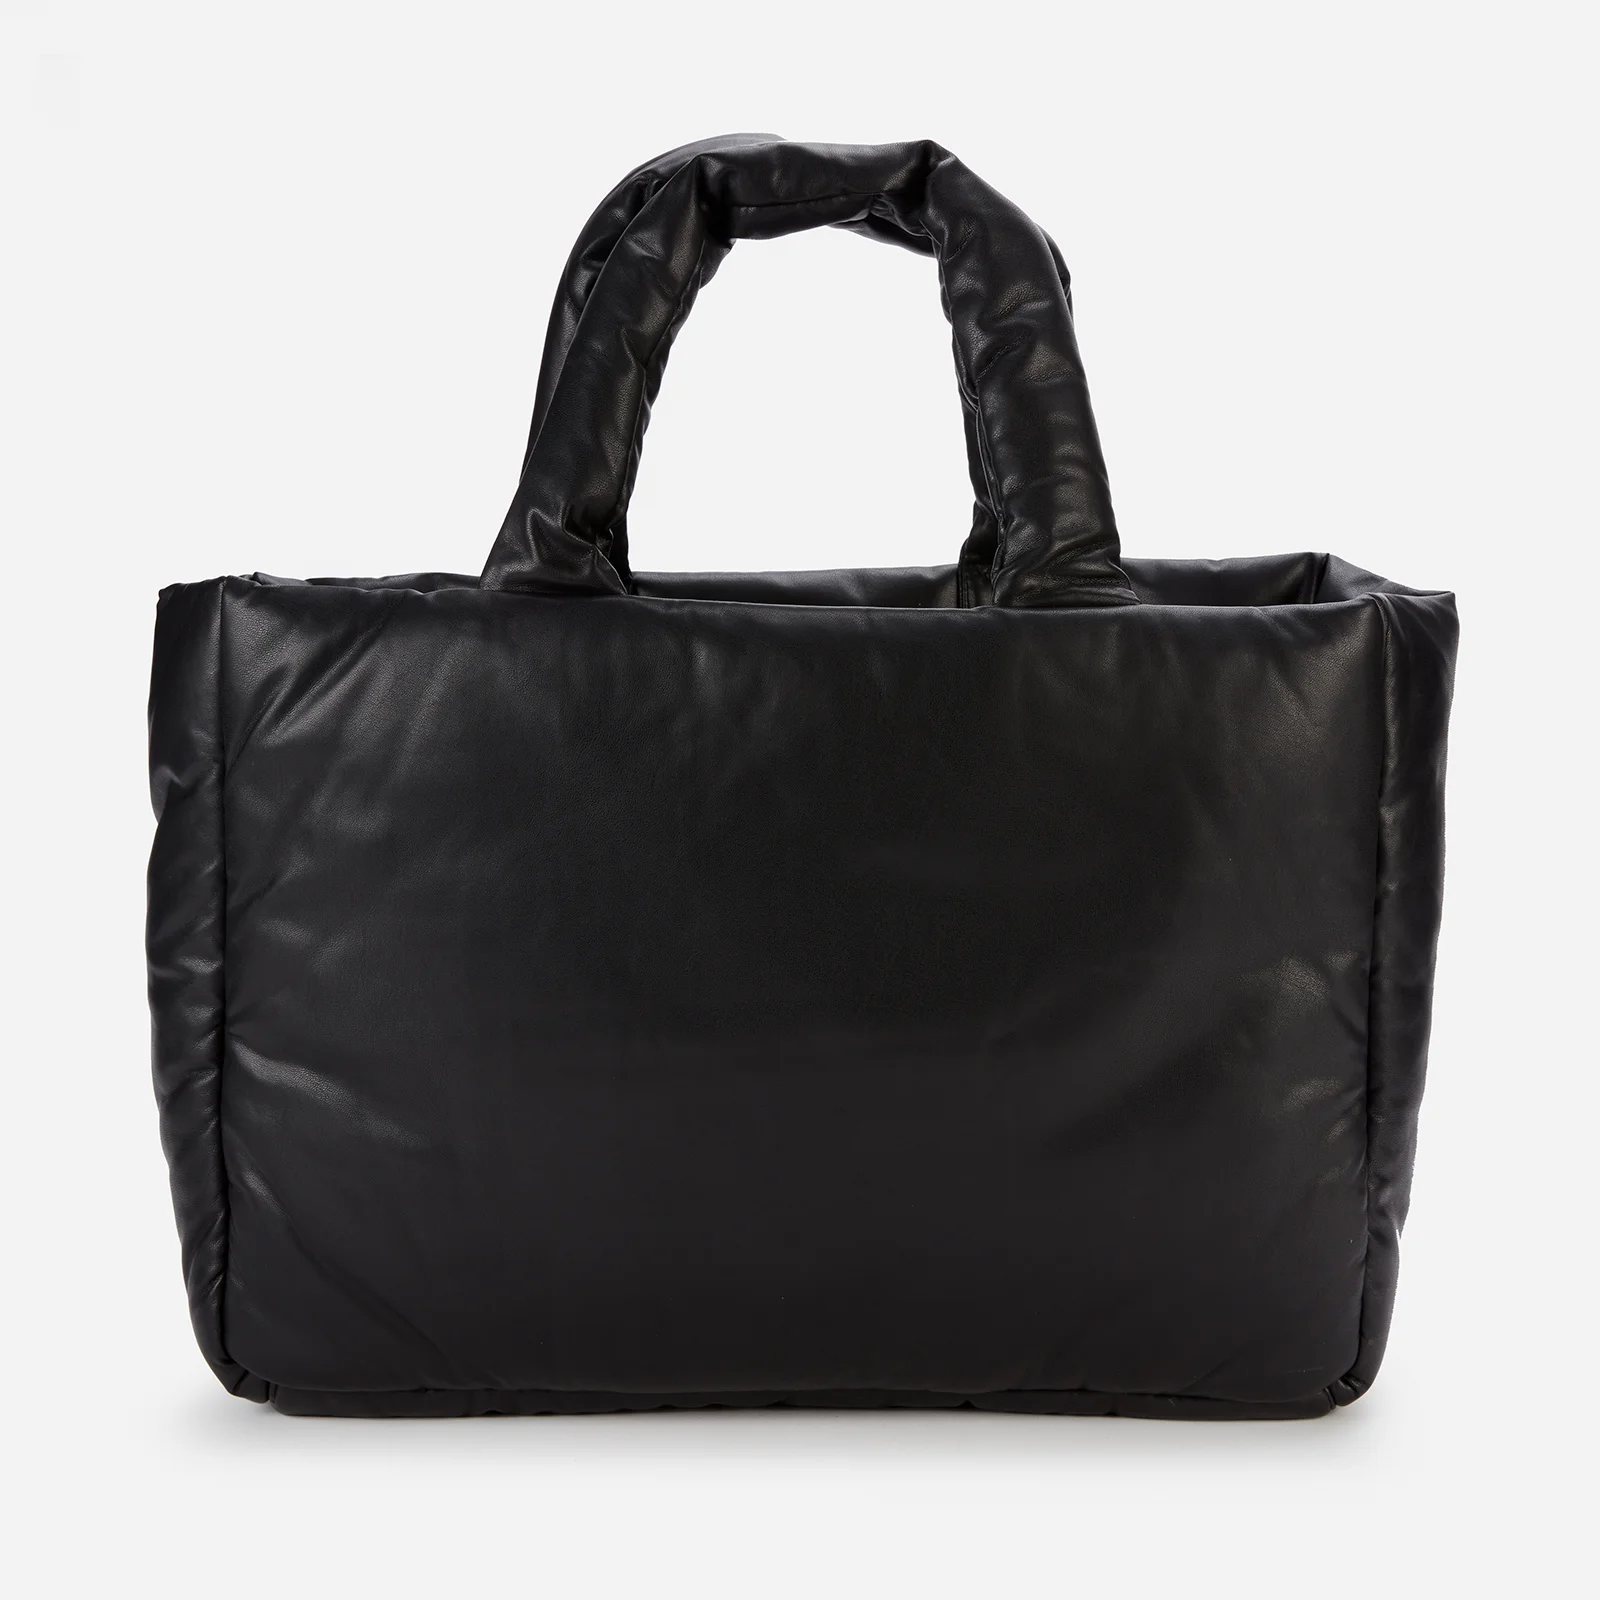 Stand Studio Women's Davina Faux Leather Bag - Black Image 1